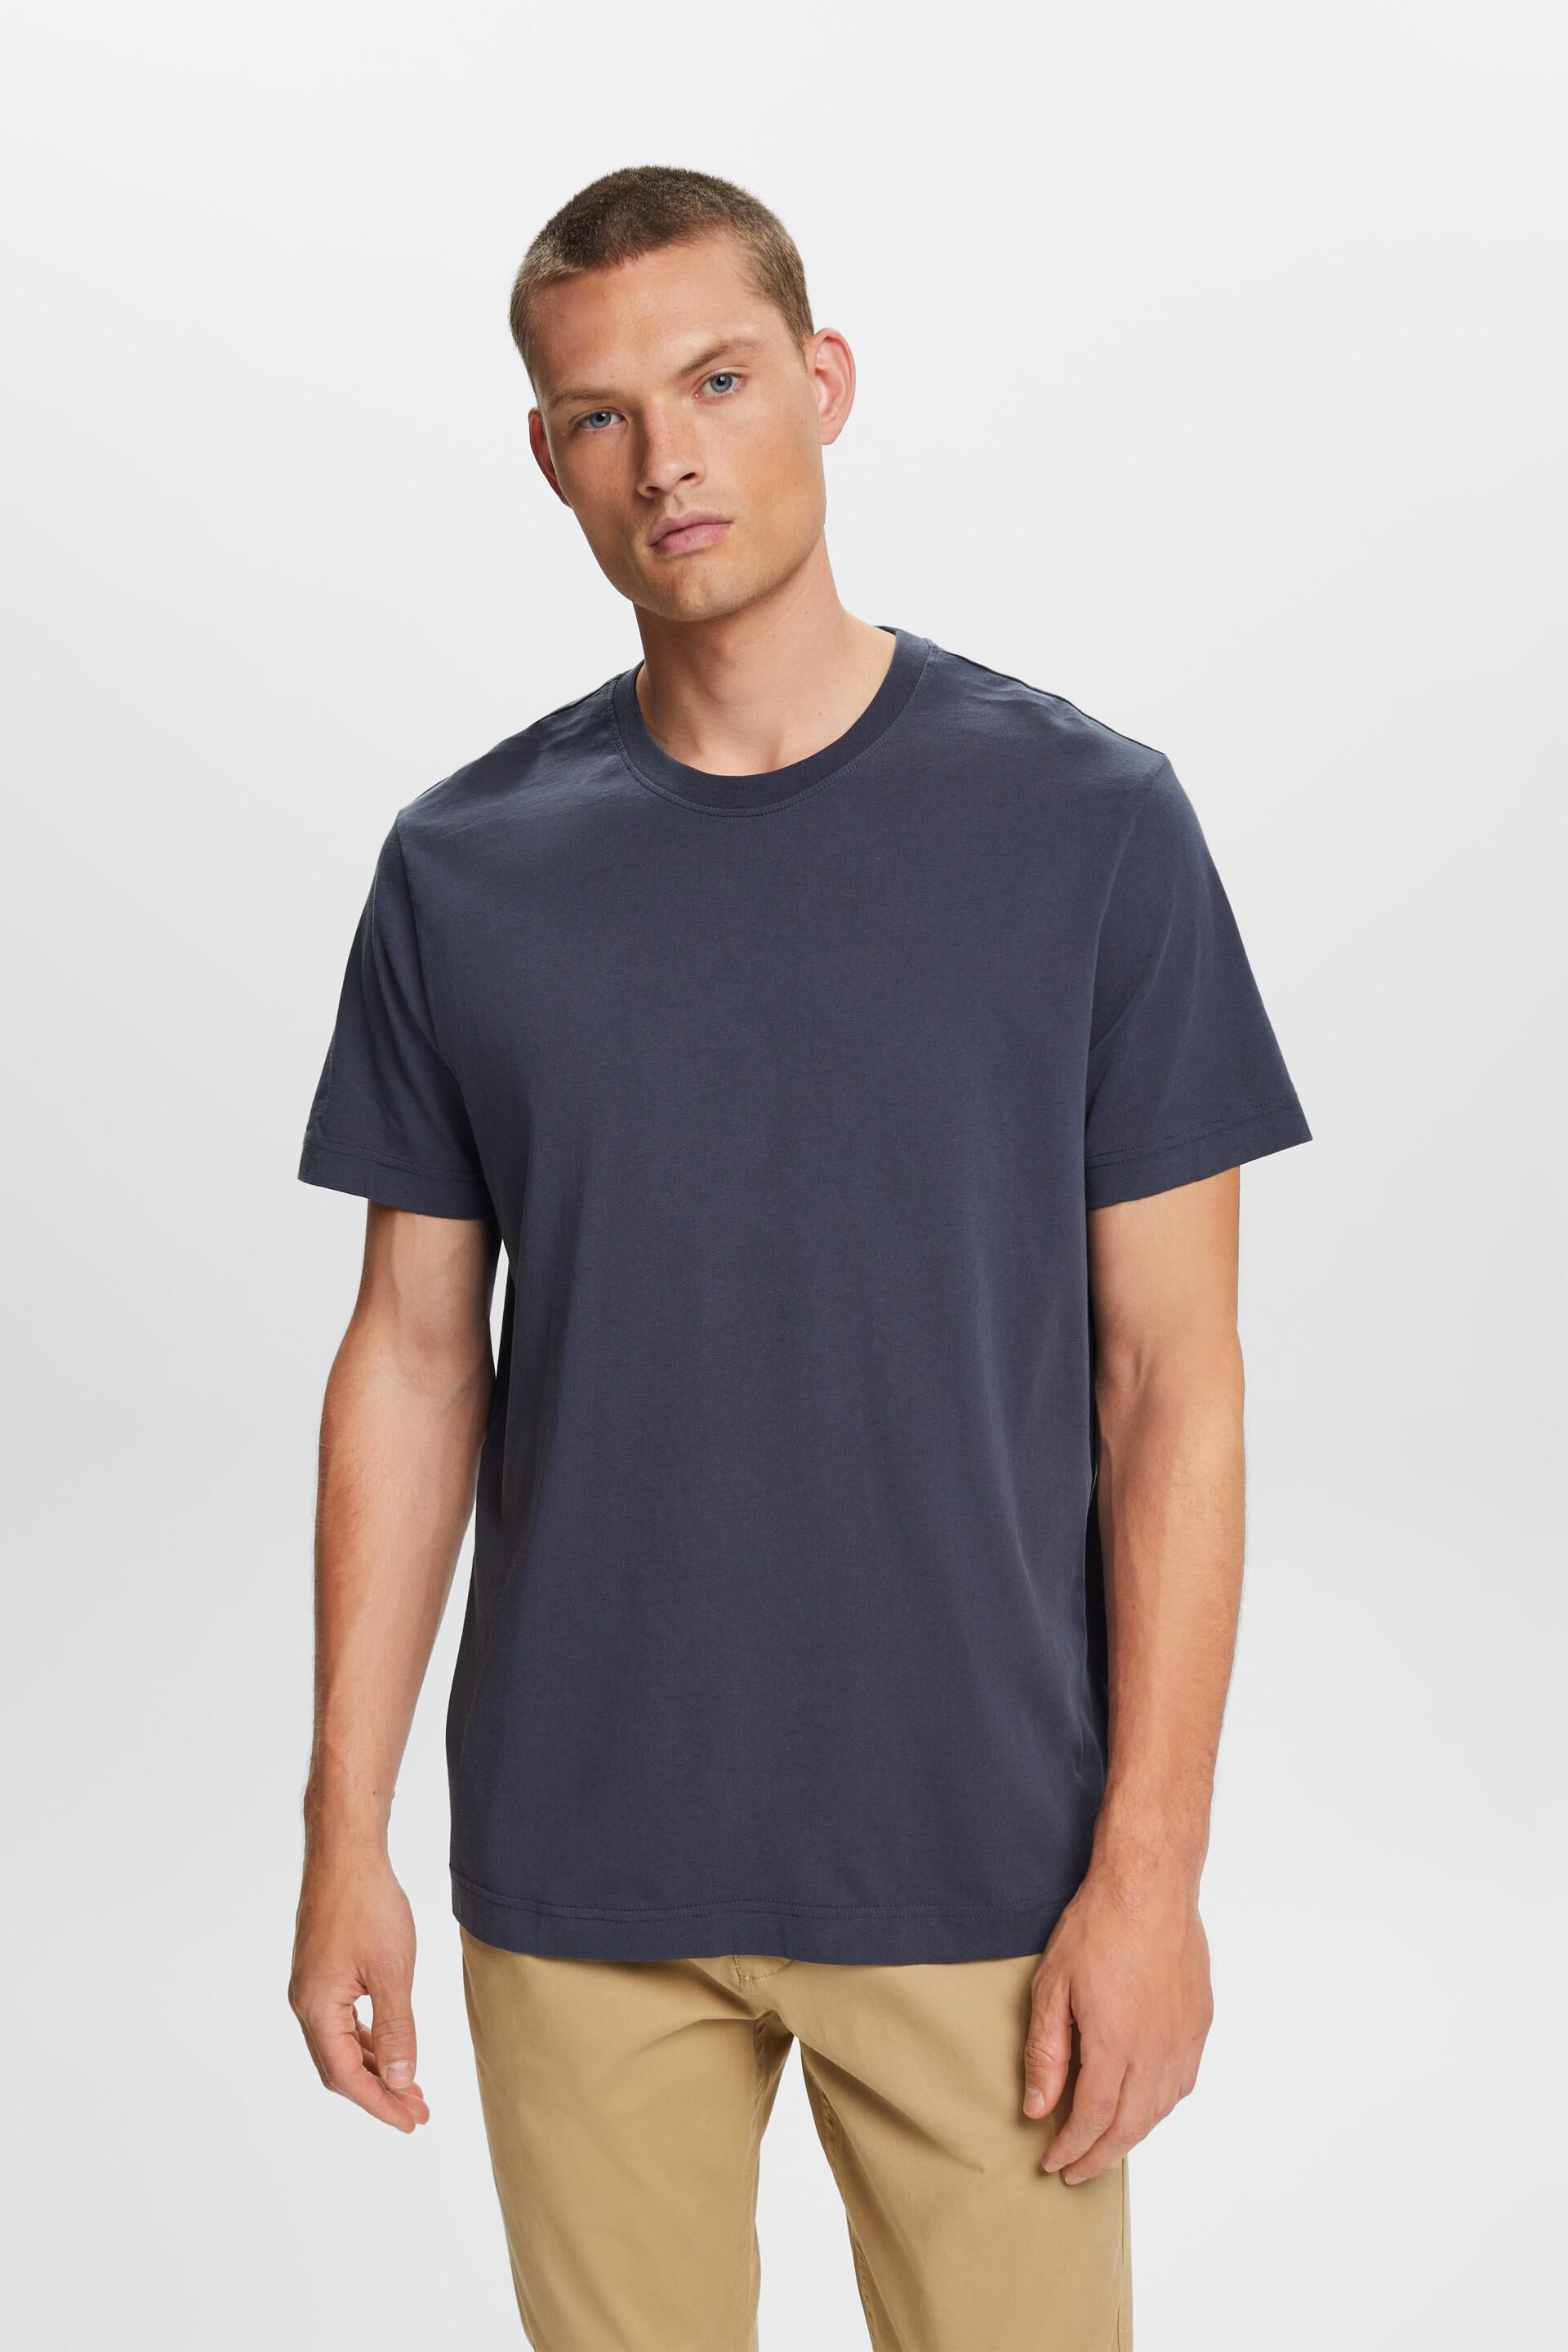 Esprit 100% t-shirt, crewneck cotton Jersey